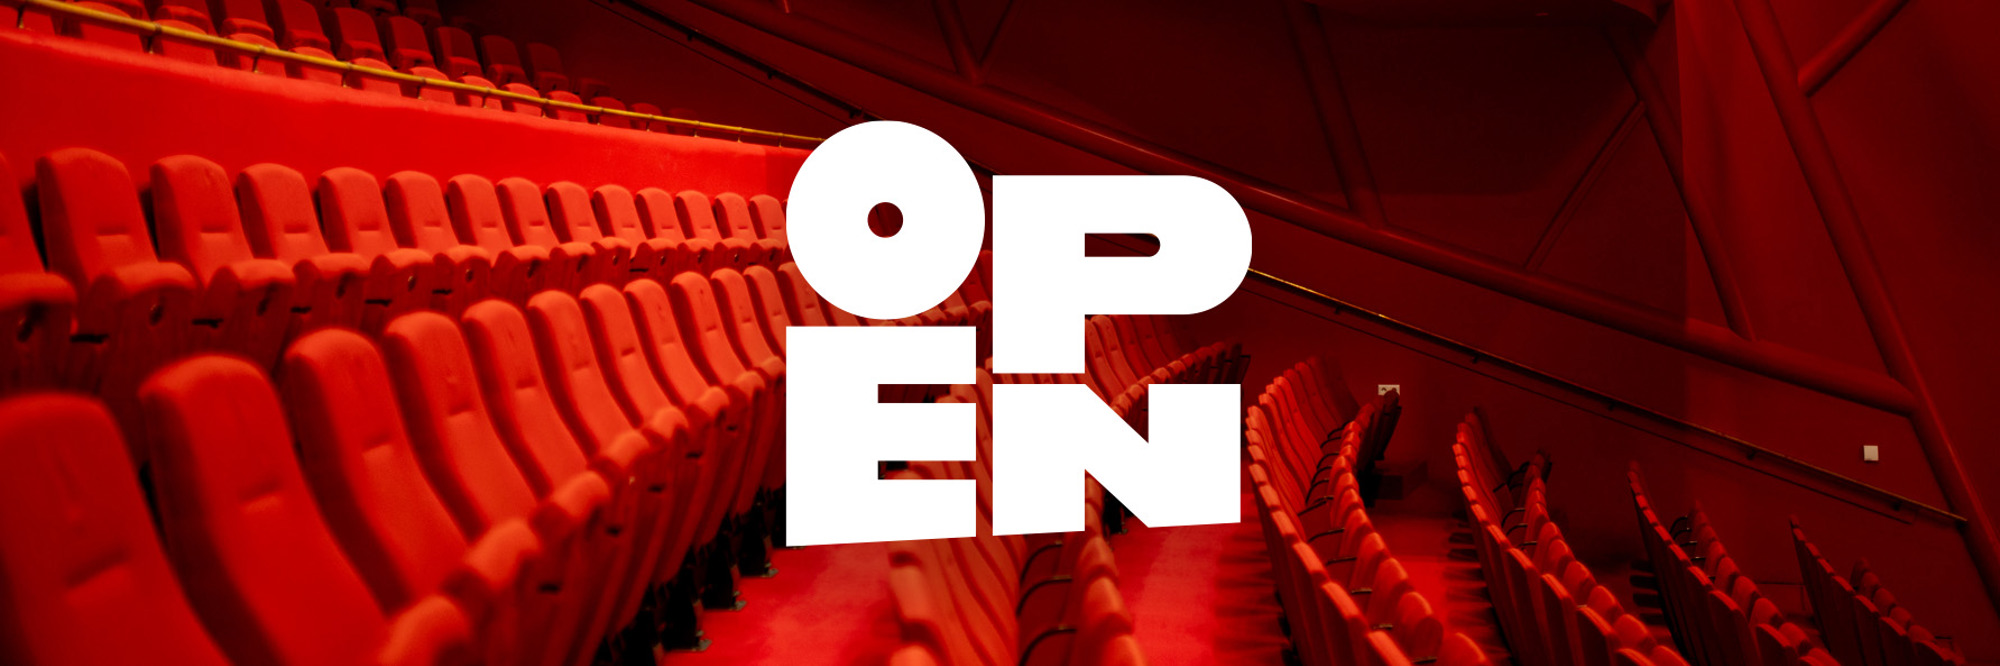 Cool Open Cabaretpreviews Header Website